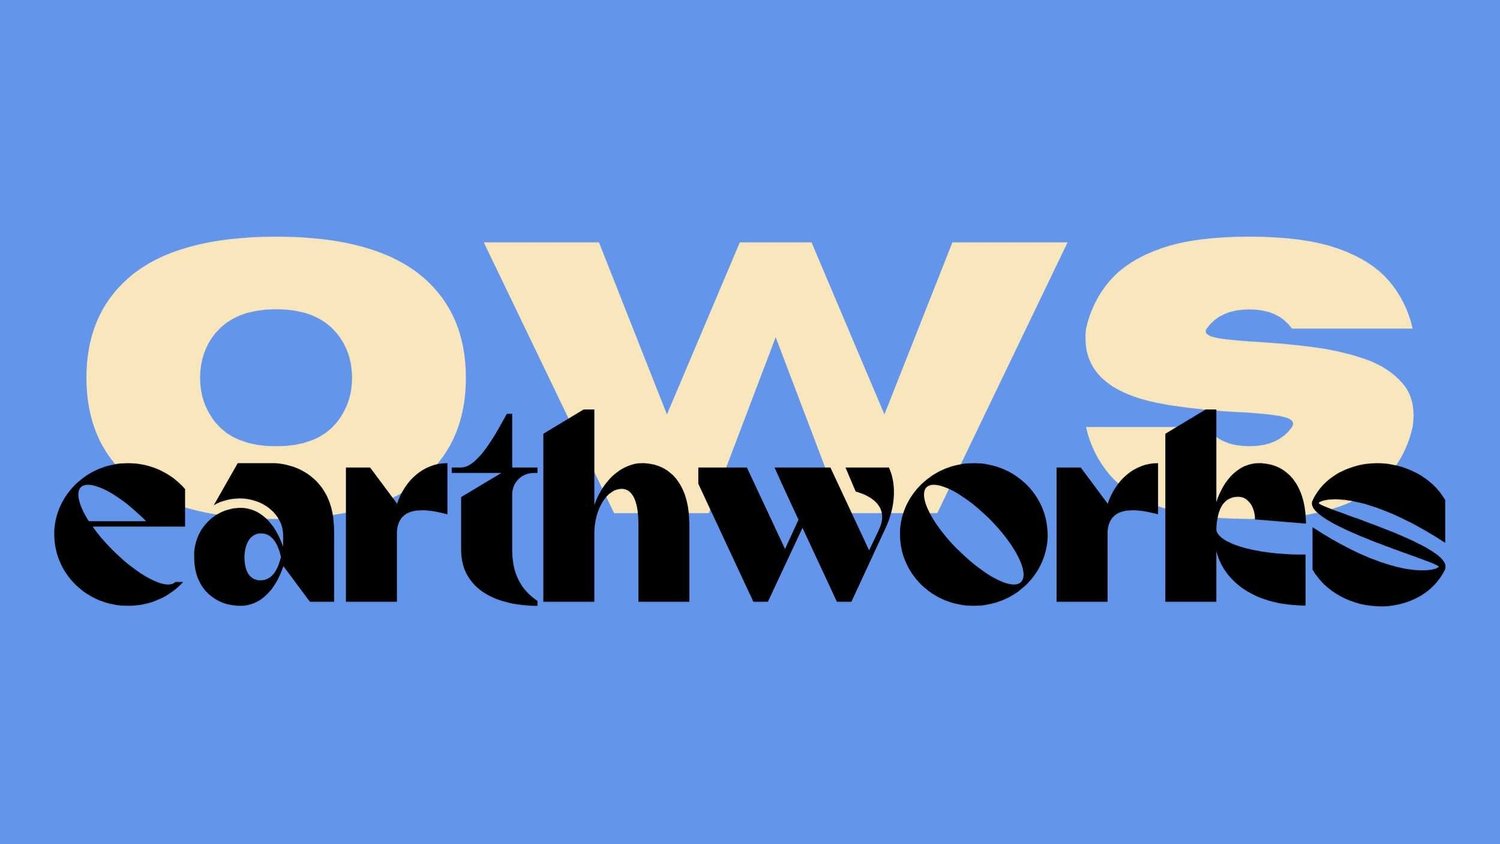 Ows Earthworks